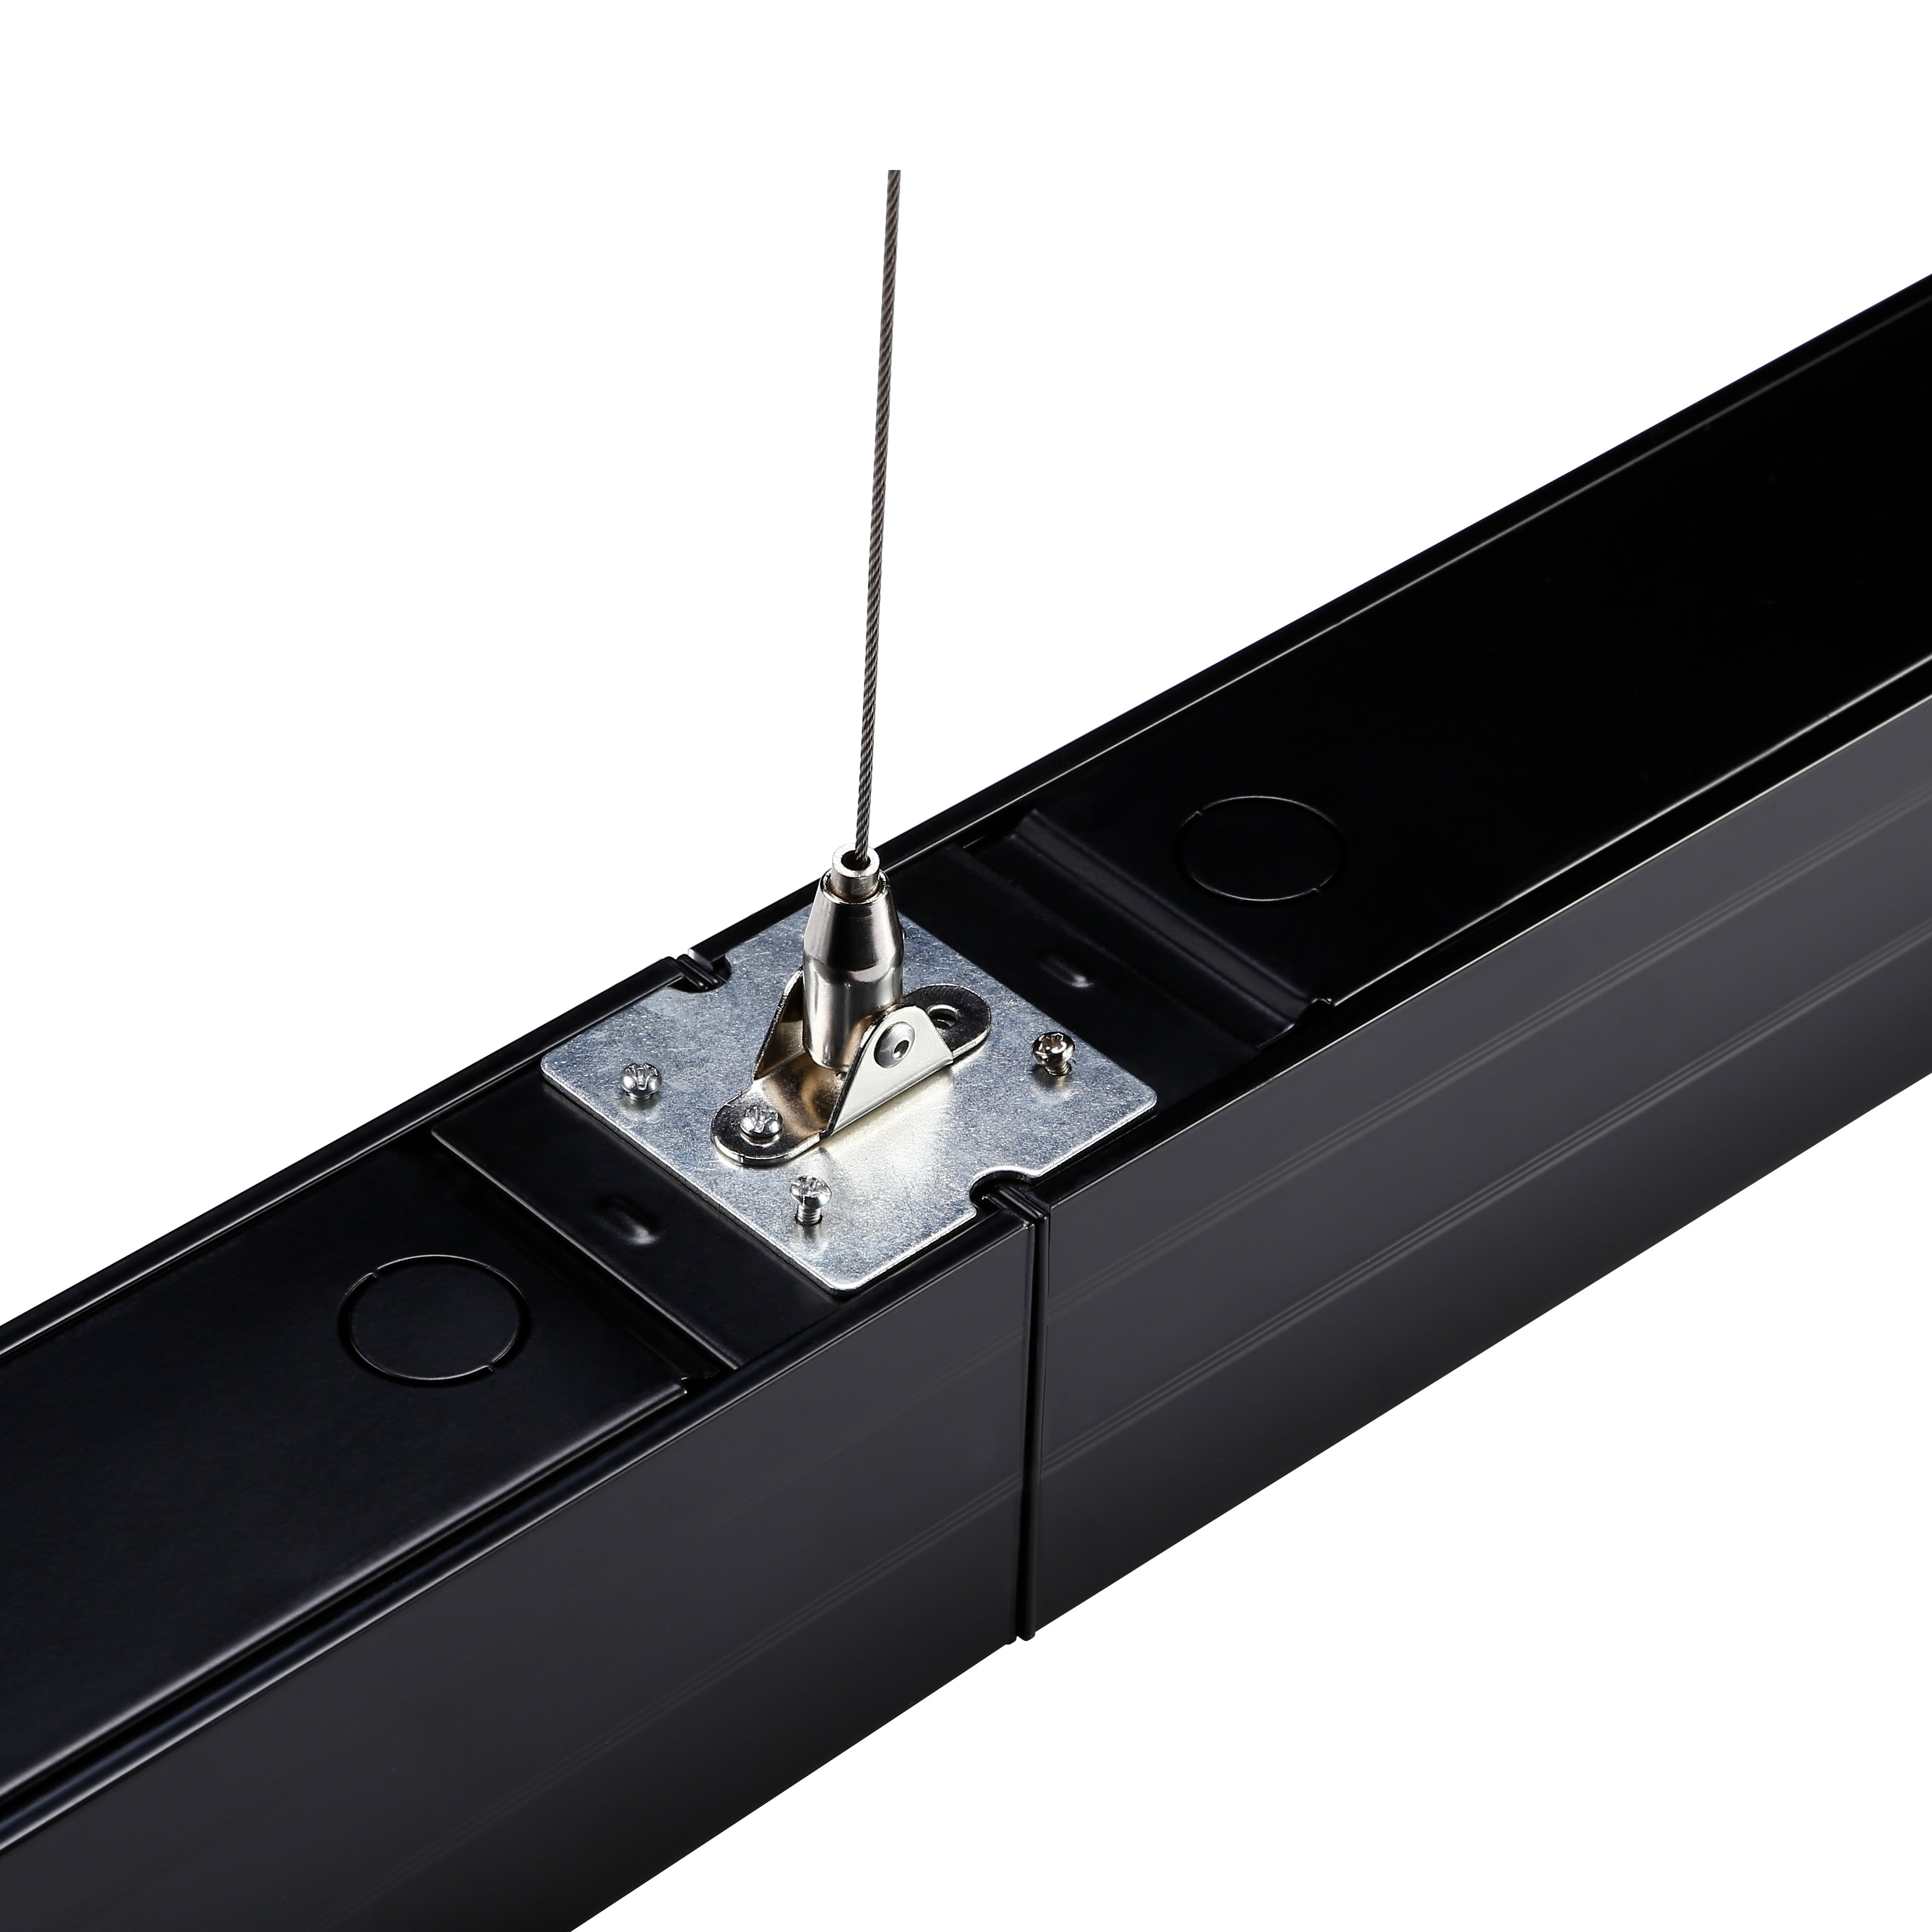 ElegaLux 4' LED Linear Light - Black - 40W - 4000K